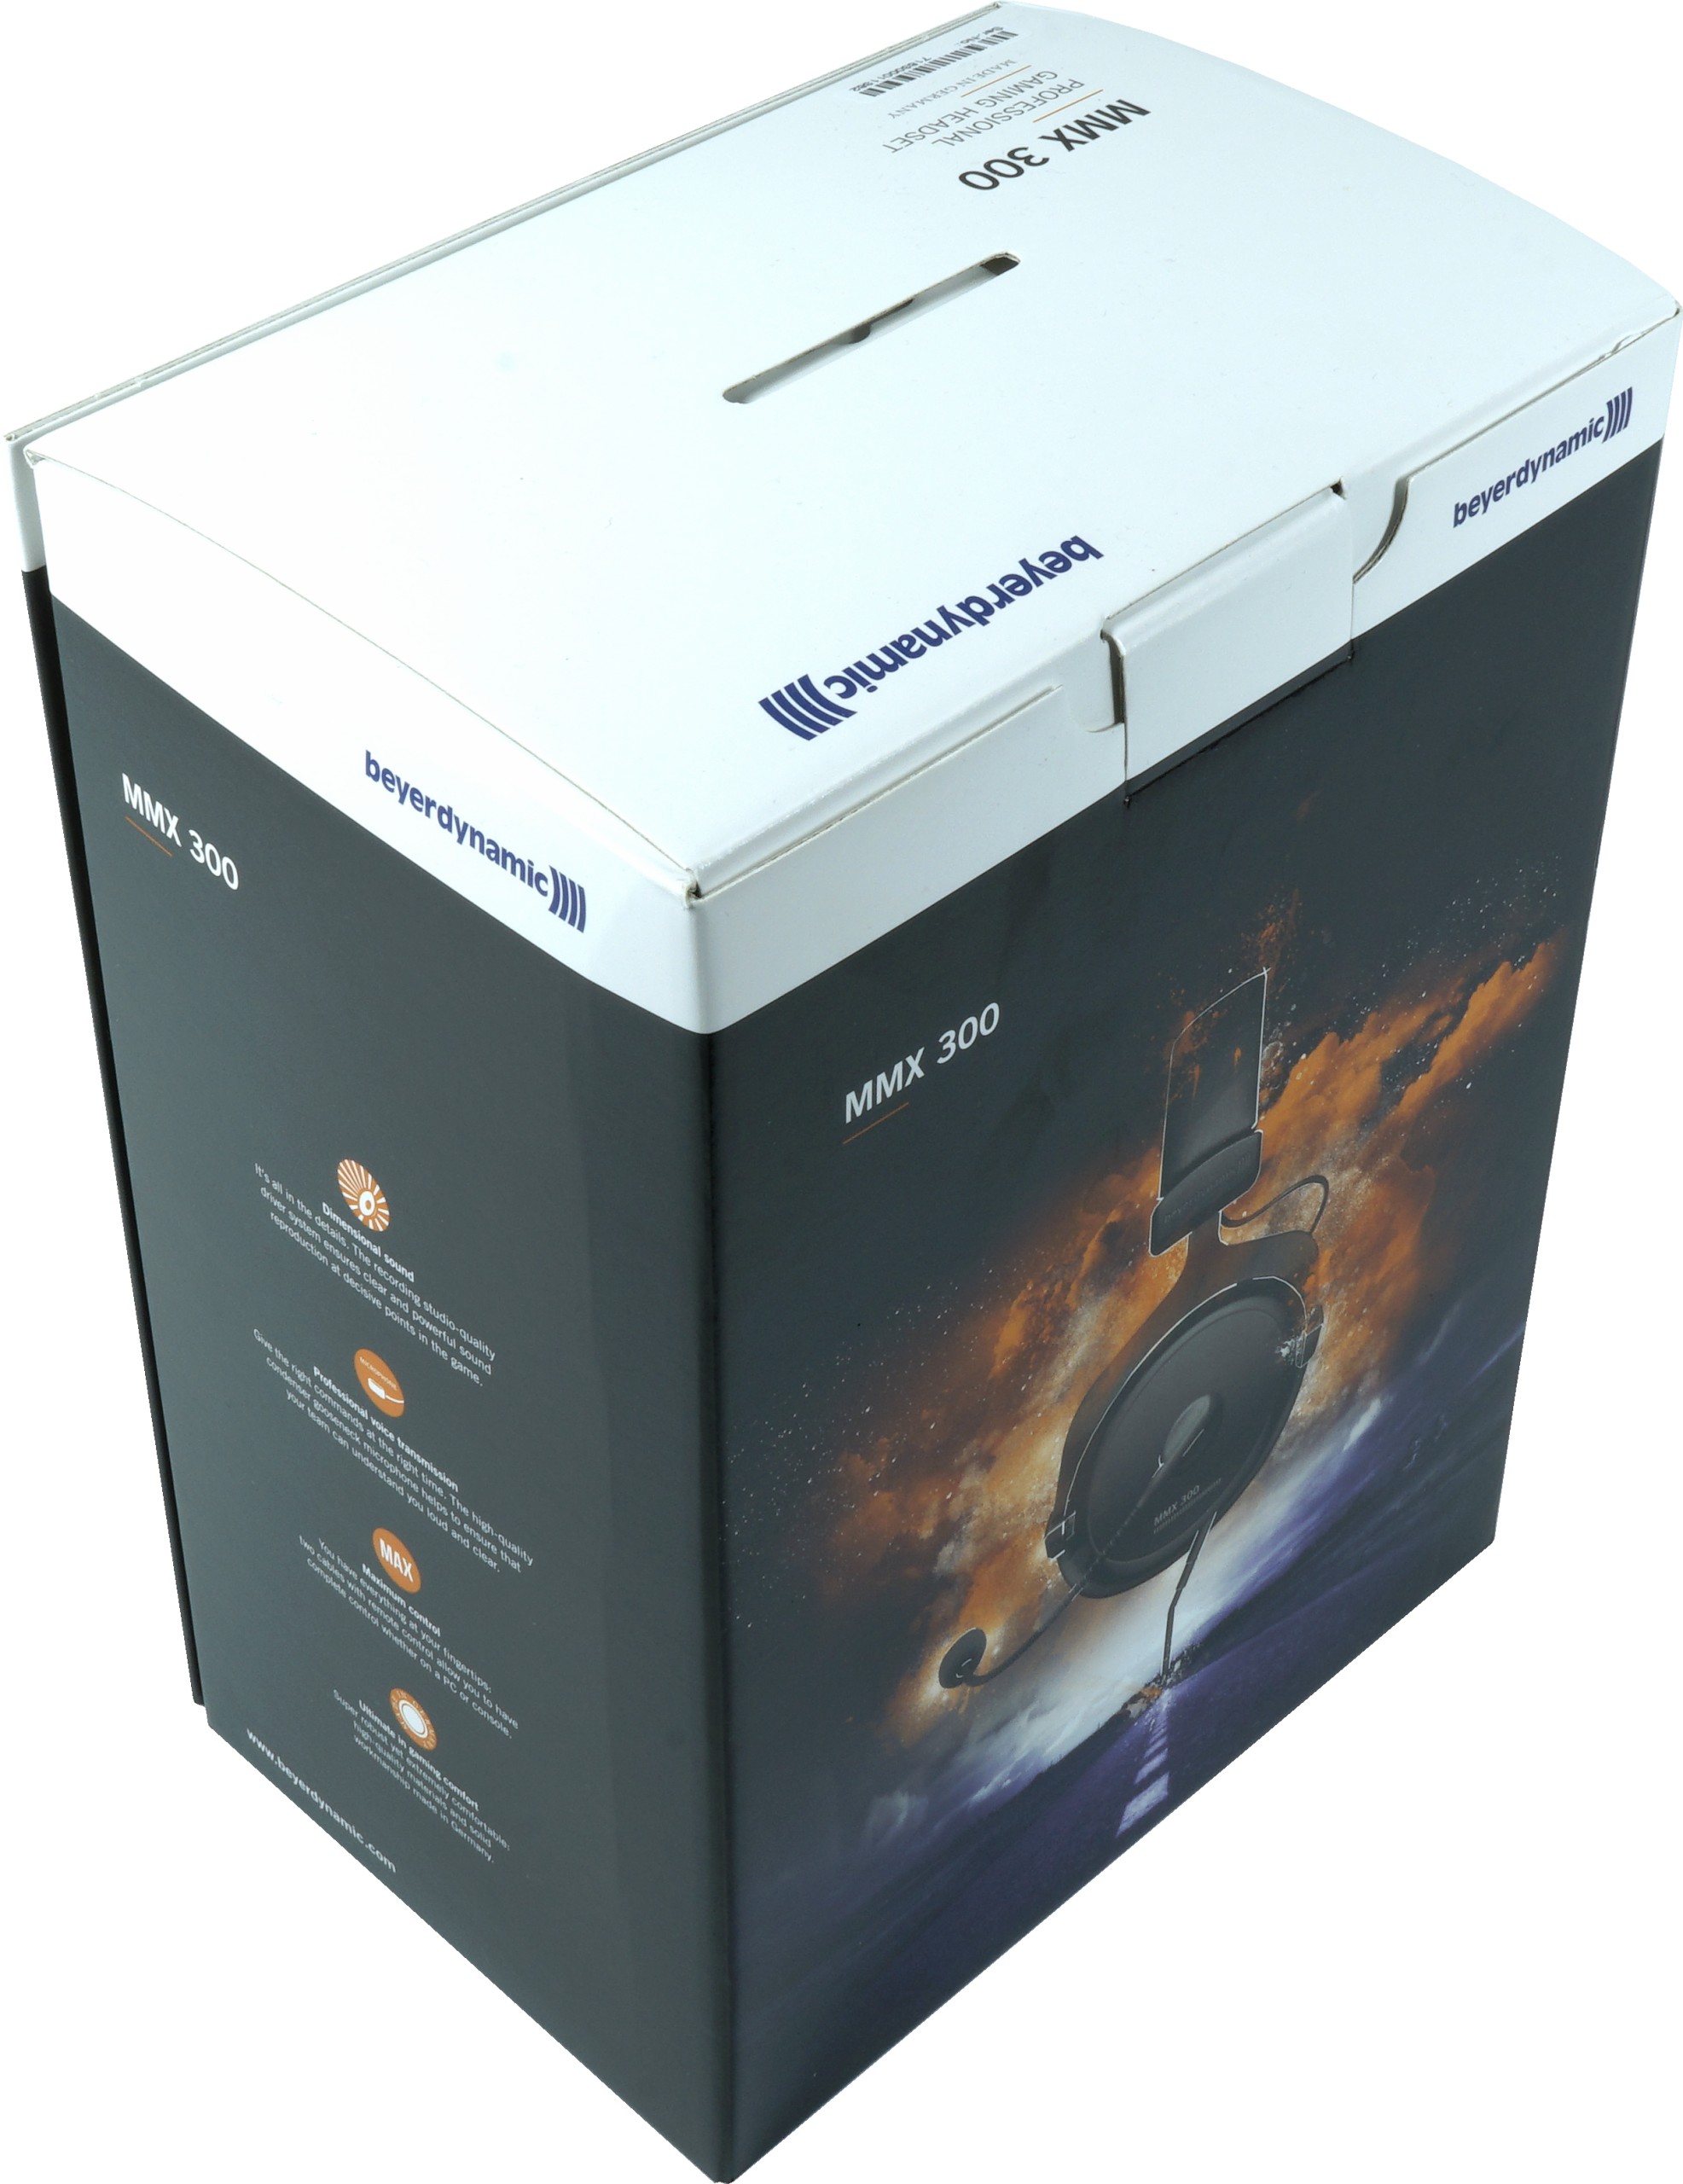 Beyerdynamic MMX 300 2nd Generation Gaming and Multimedia Headset